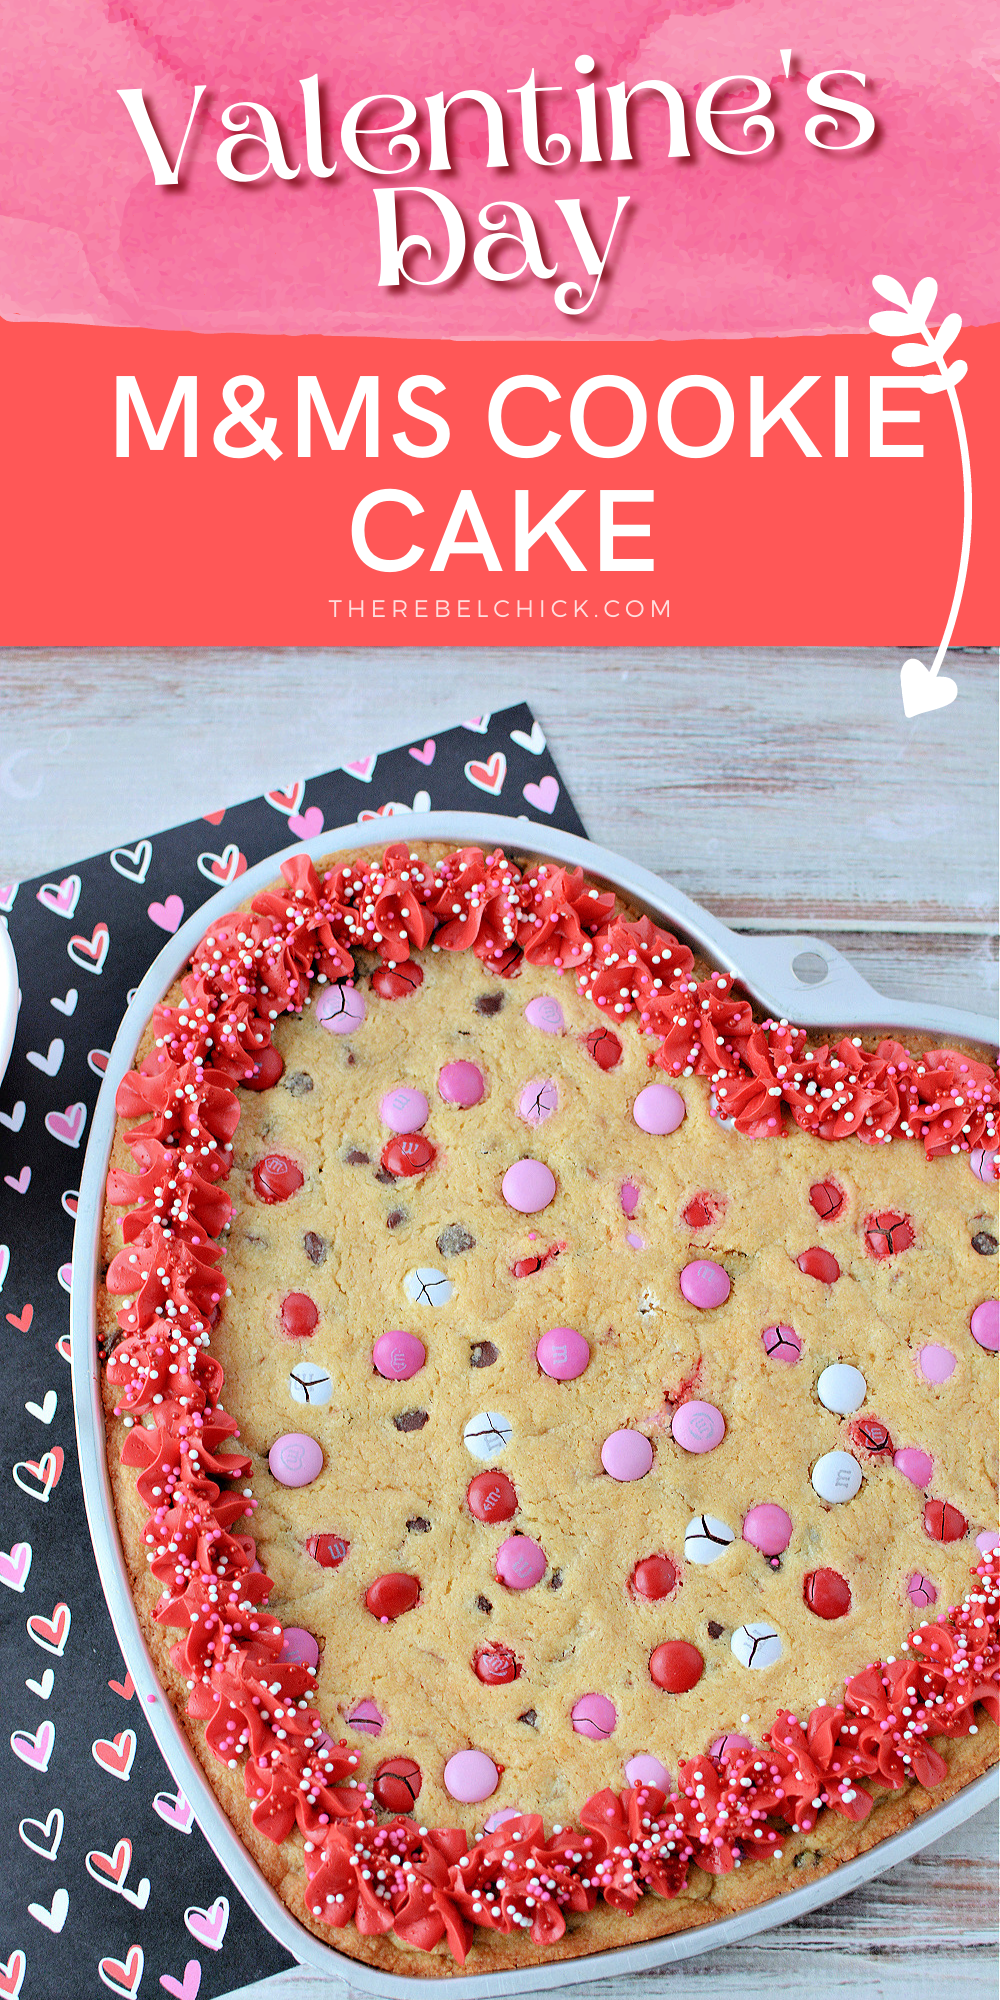 M&Ms Cookie Cake Recipe